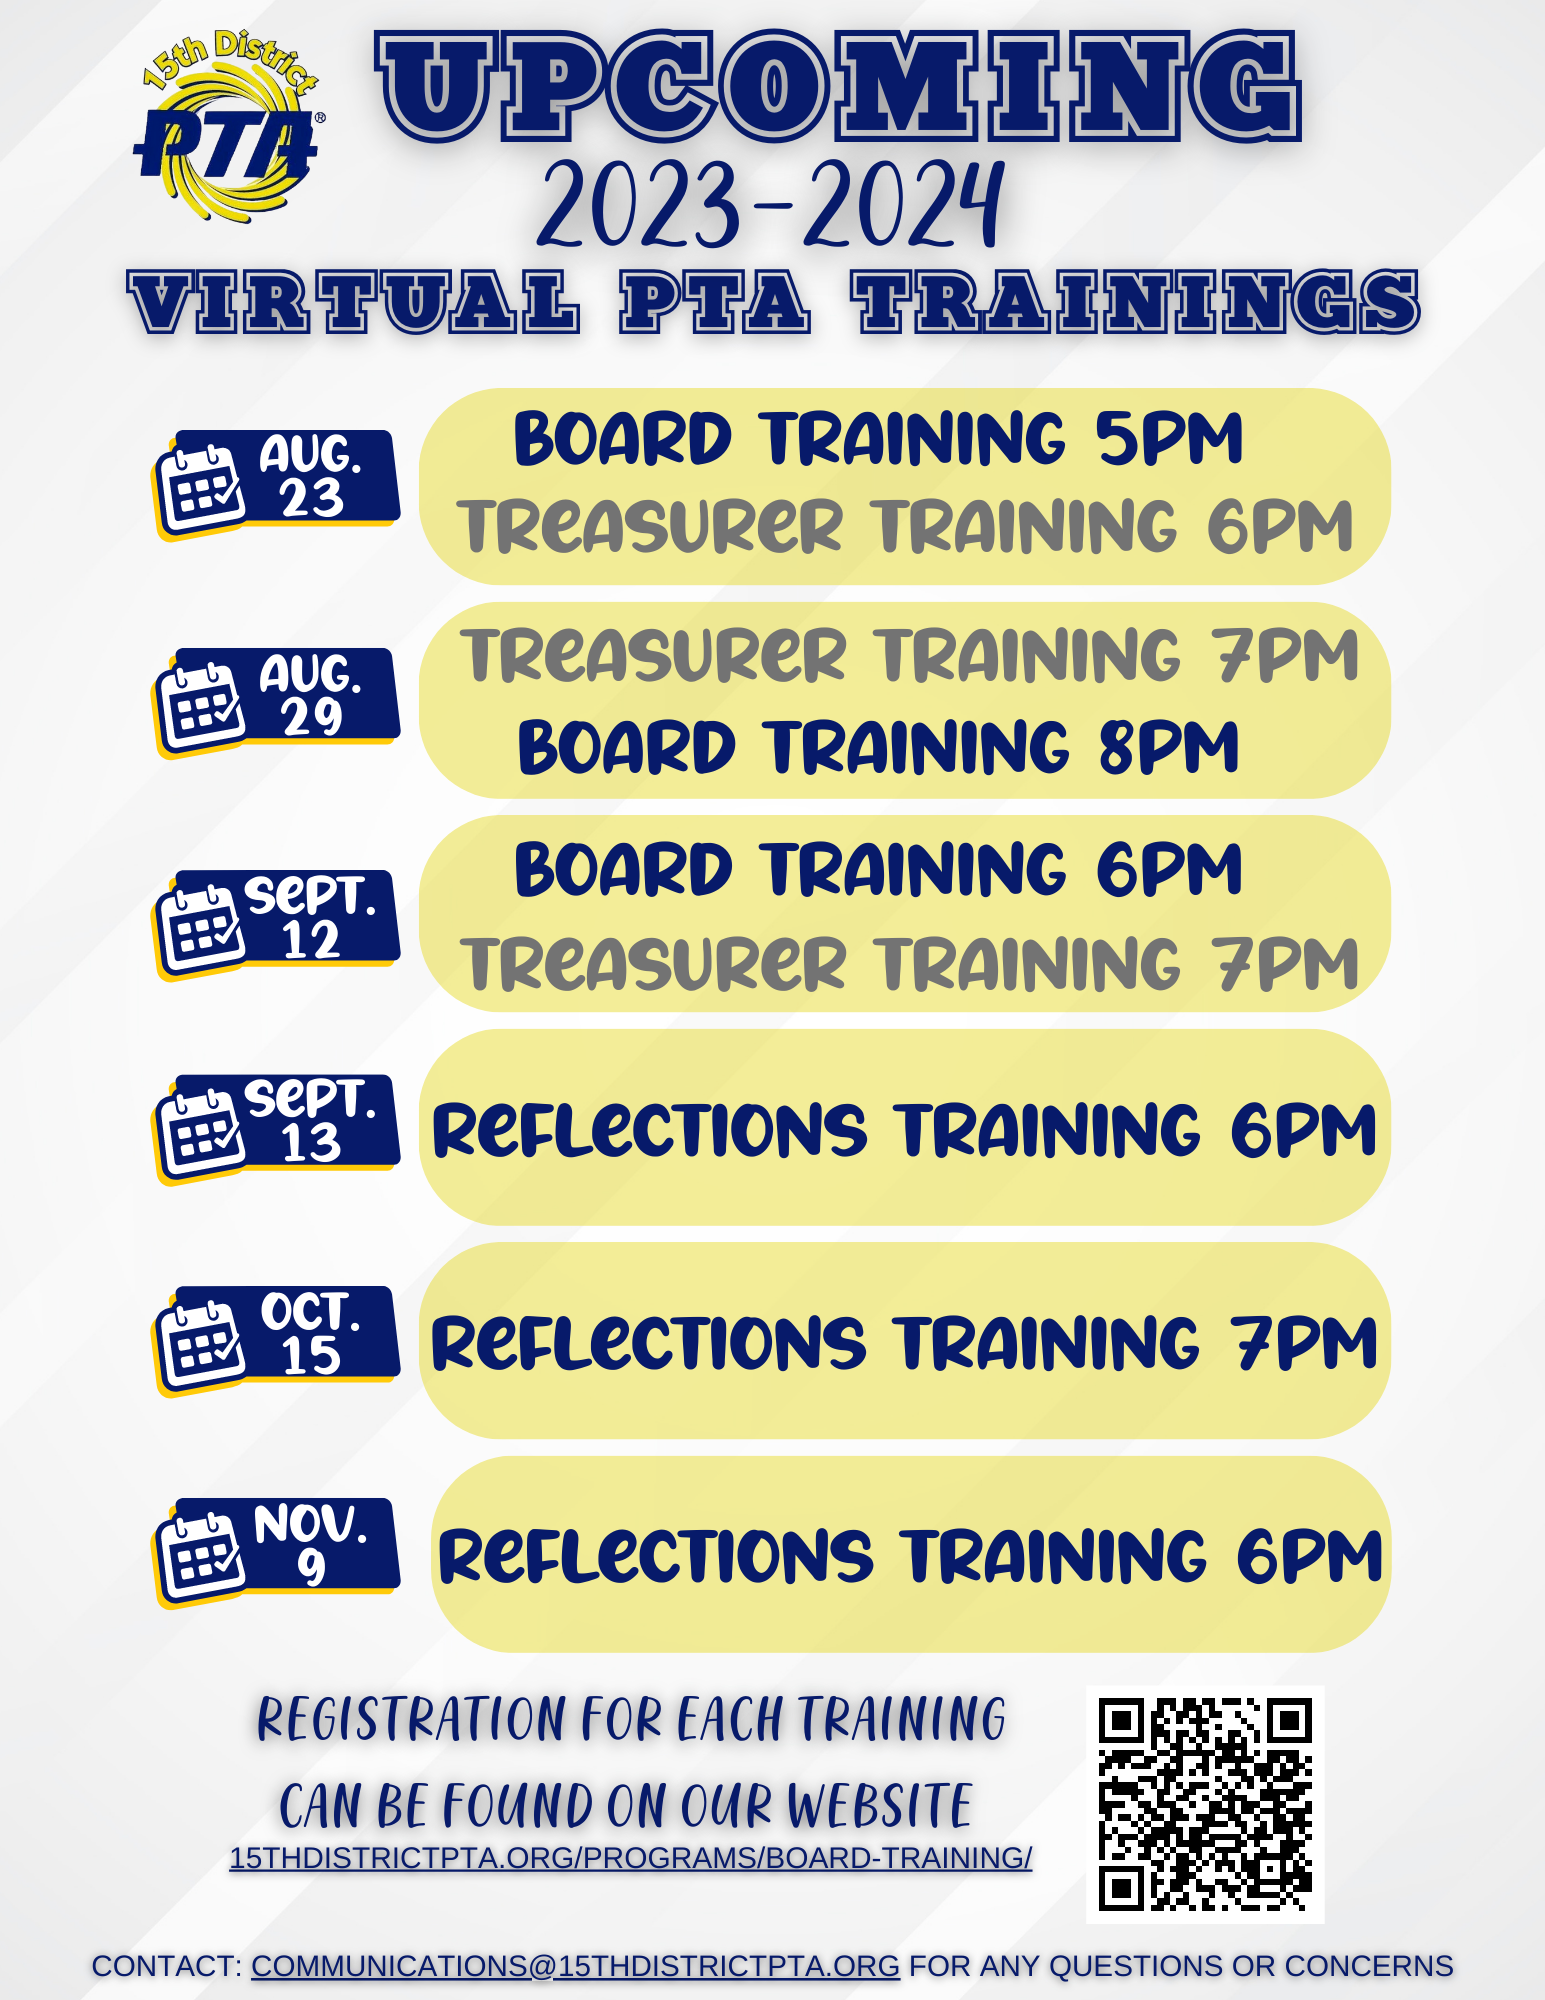 Virtual Training Opportunities